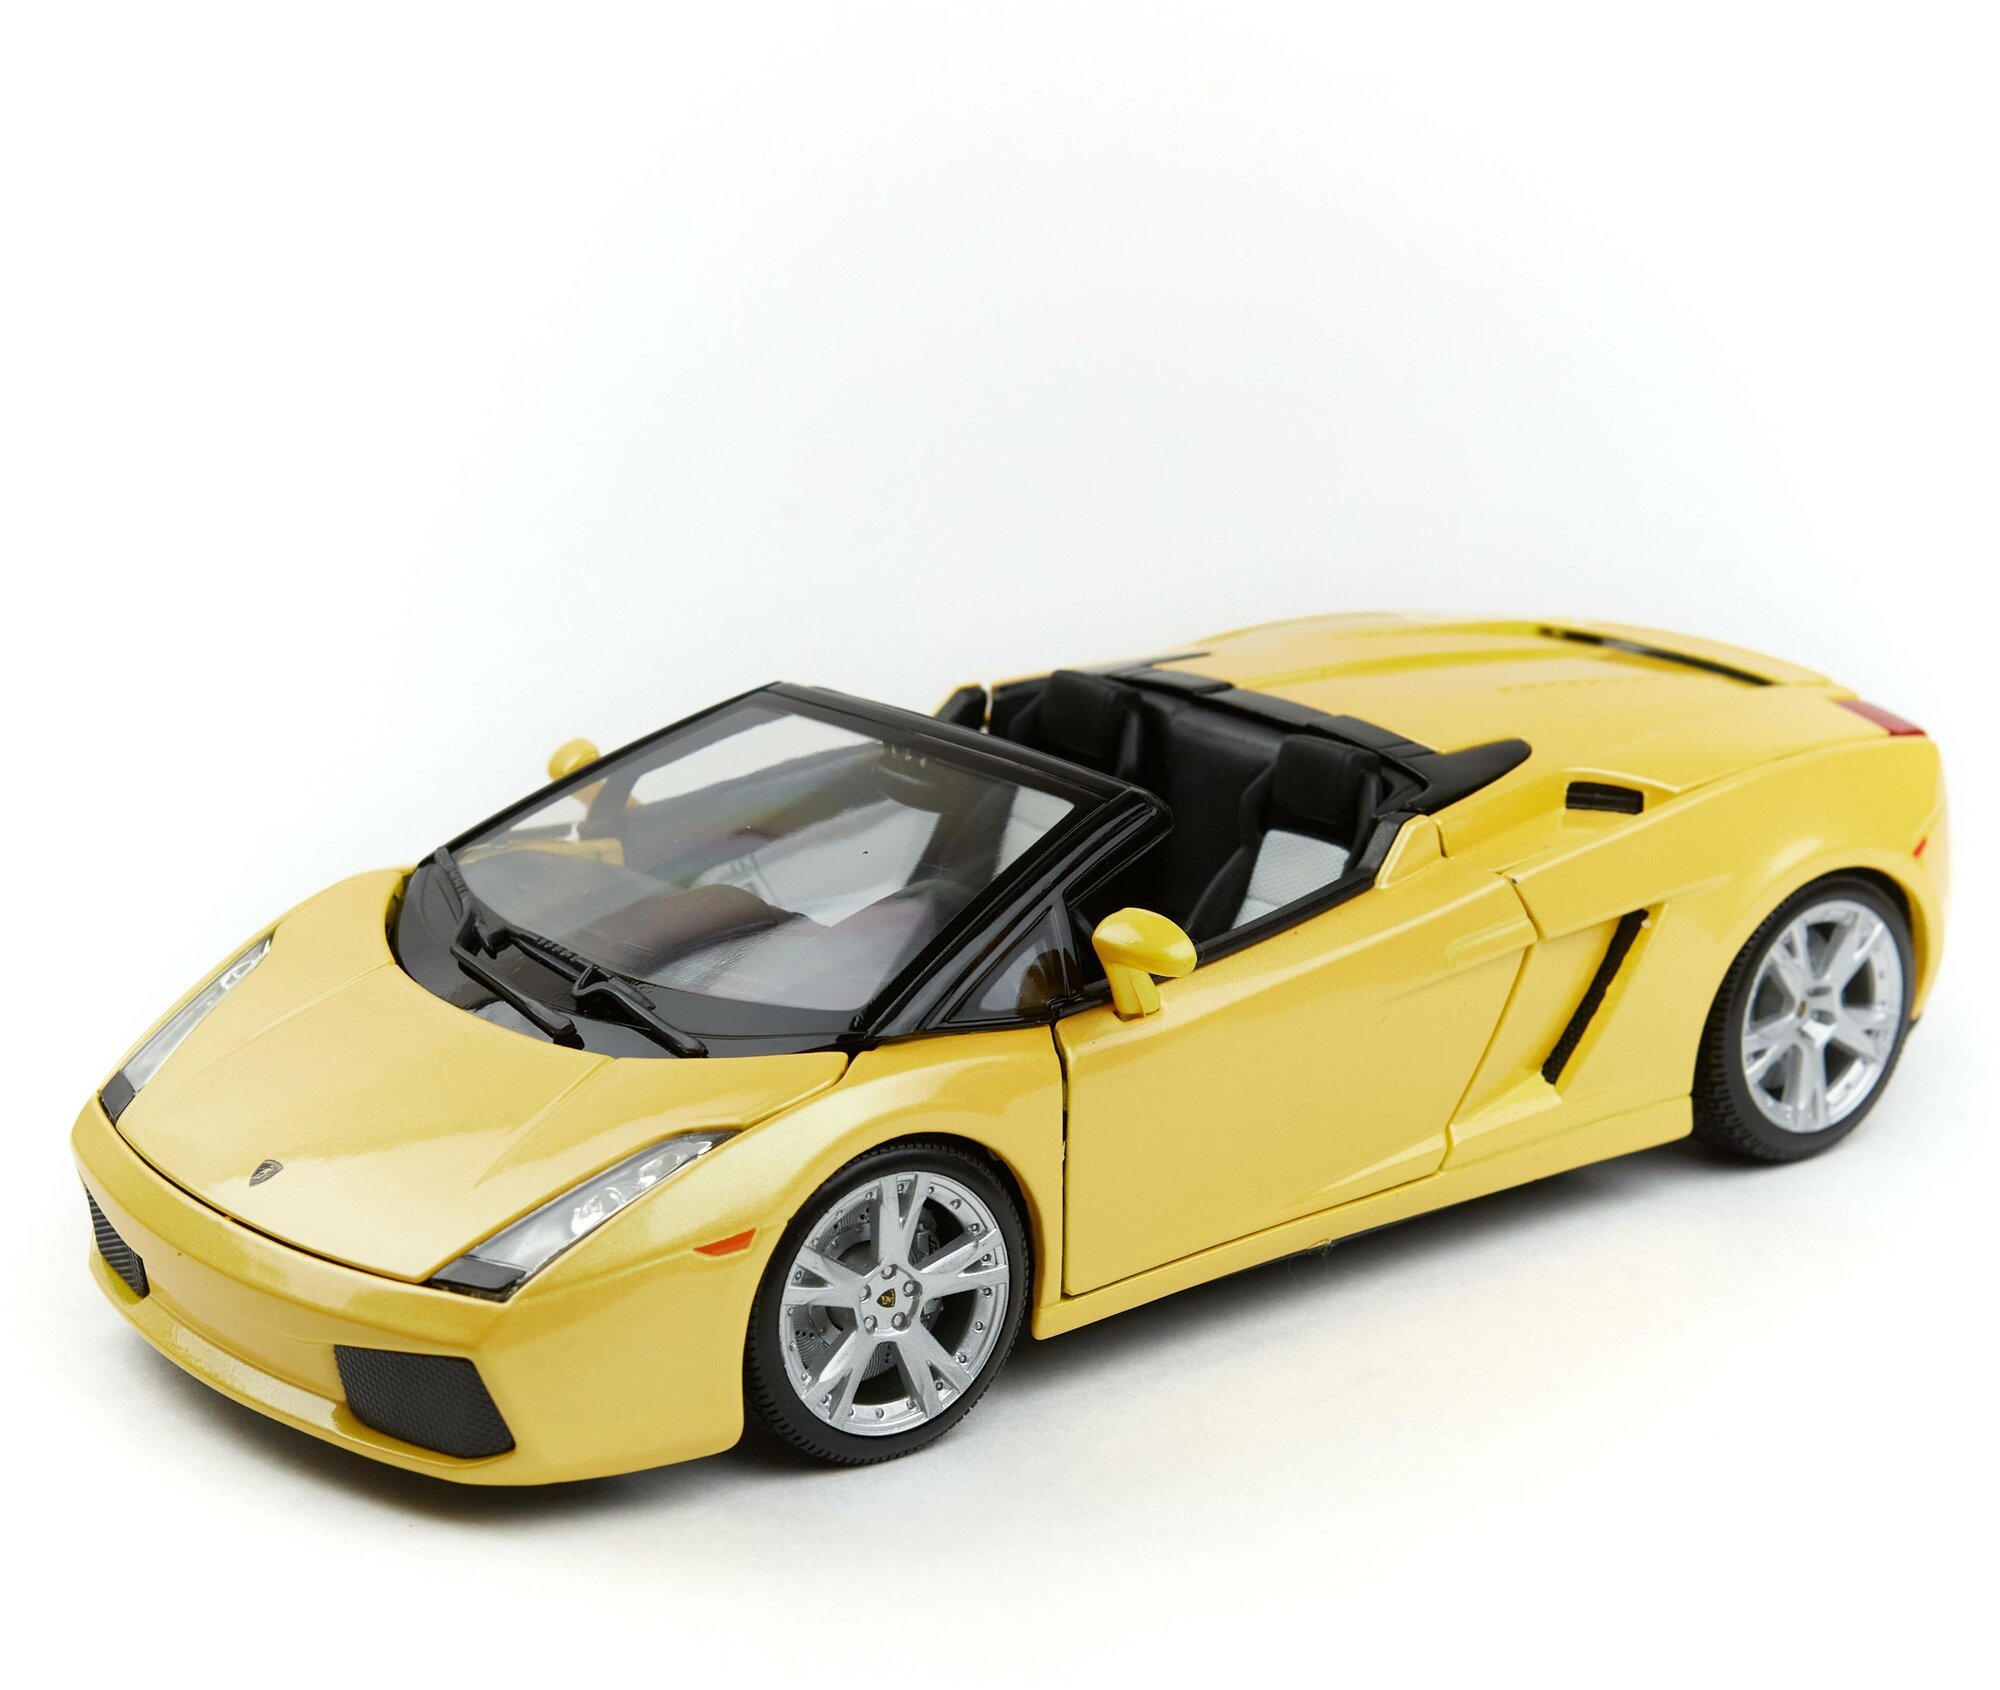 Bburago Коллекционная машинка 1:18 Lamborghini Gallardo Spyder, 18-12016, желтая